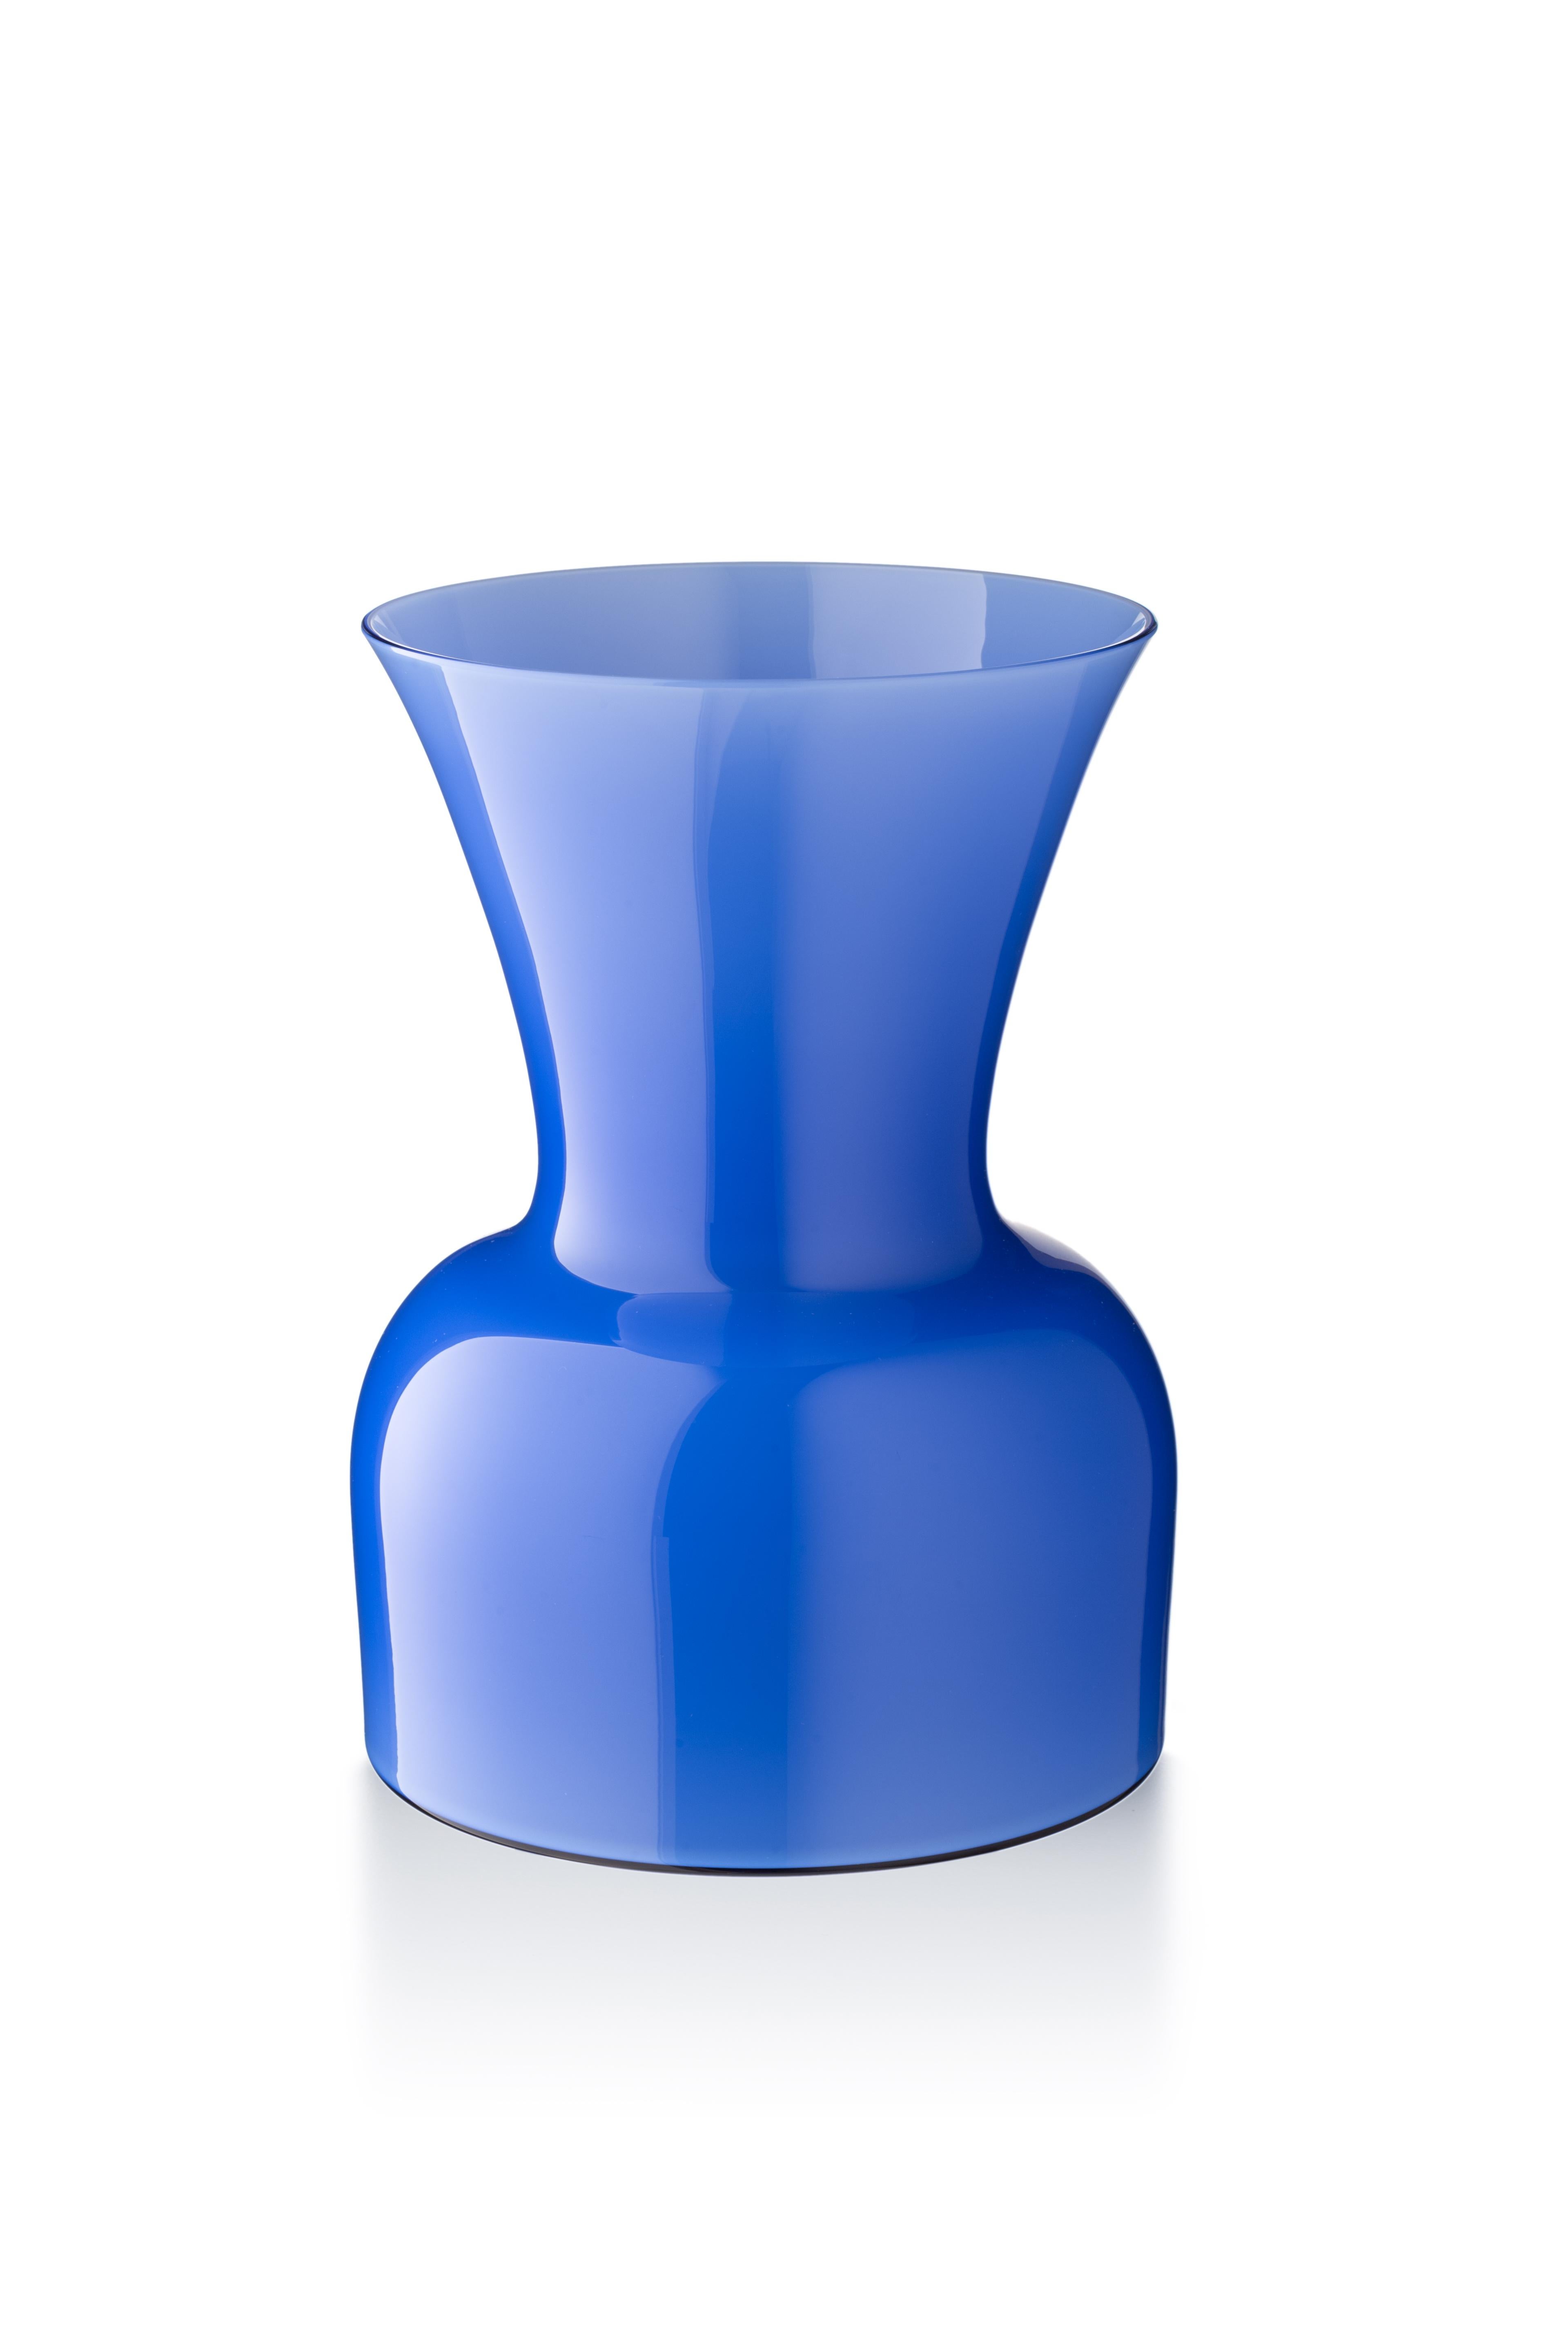 Blue (10048) Large Profili Daisy Murano Glass Vase by Anna Gili